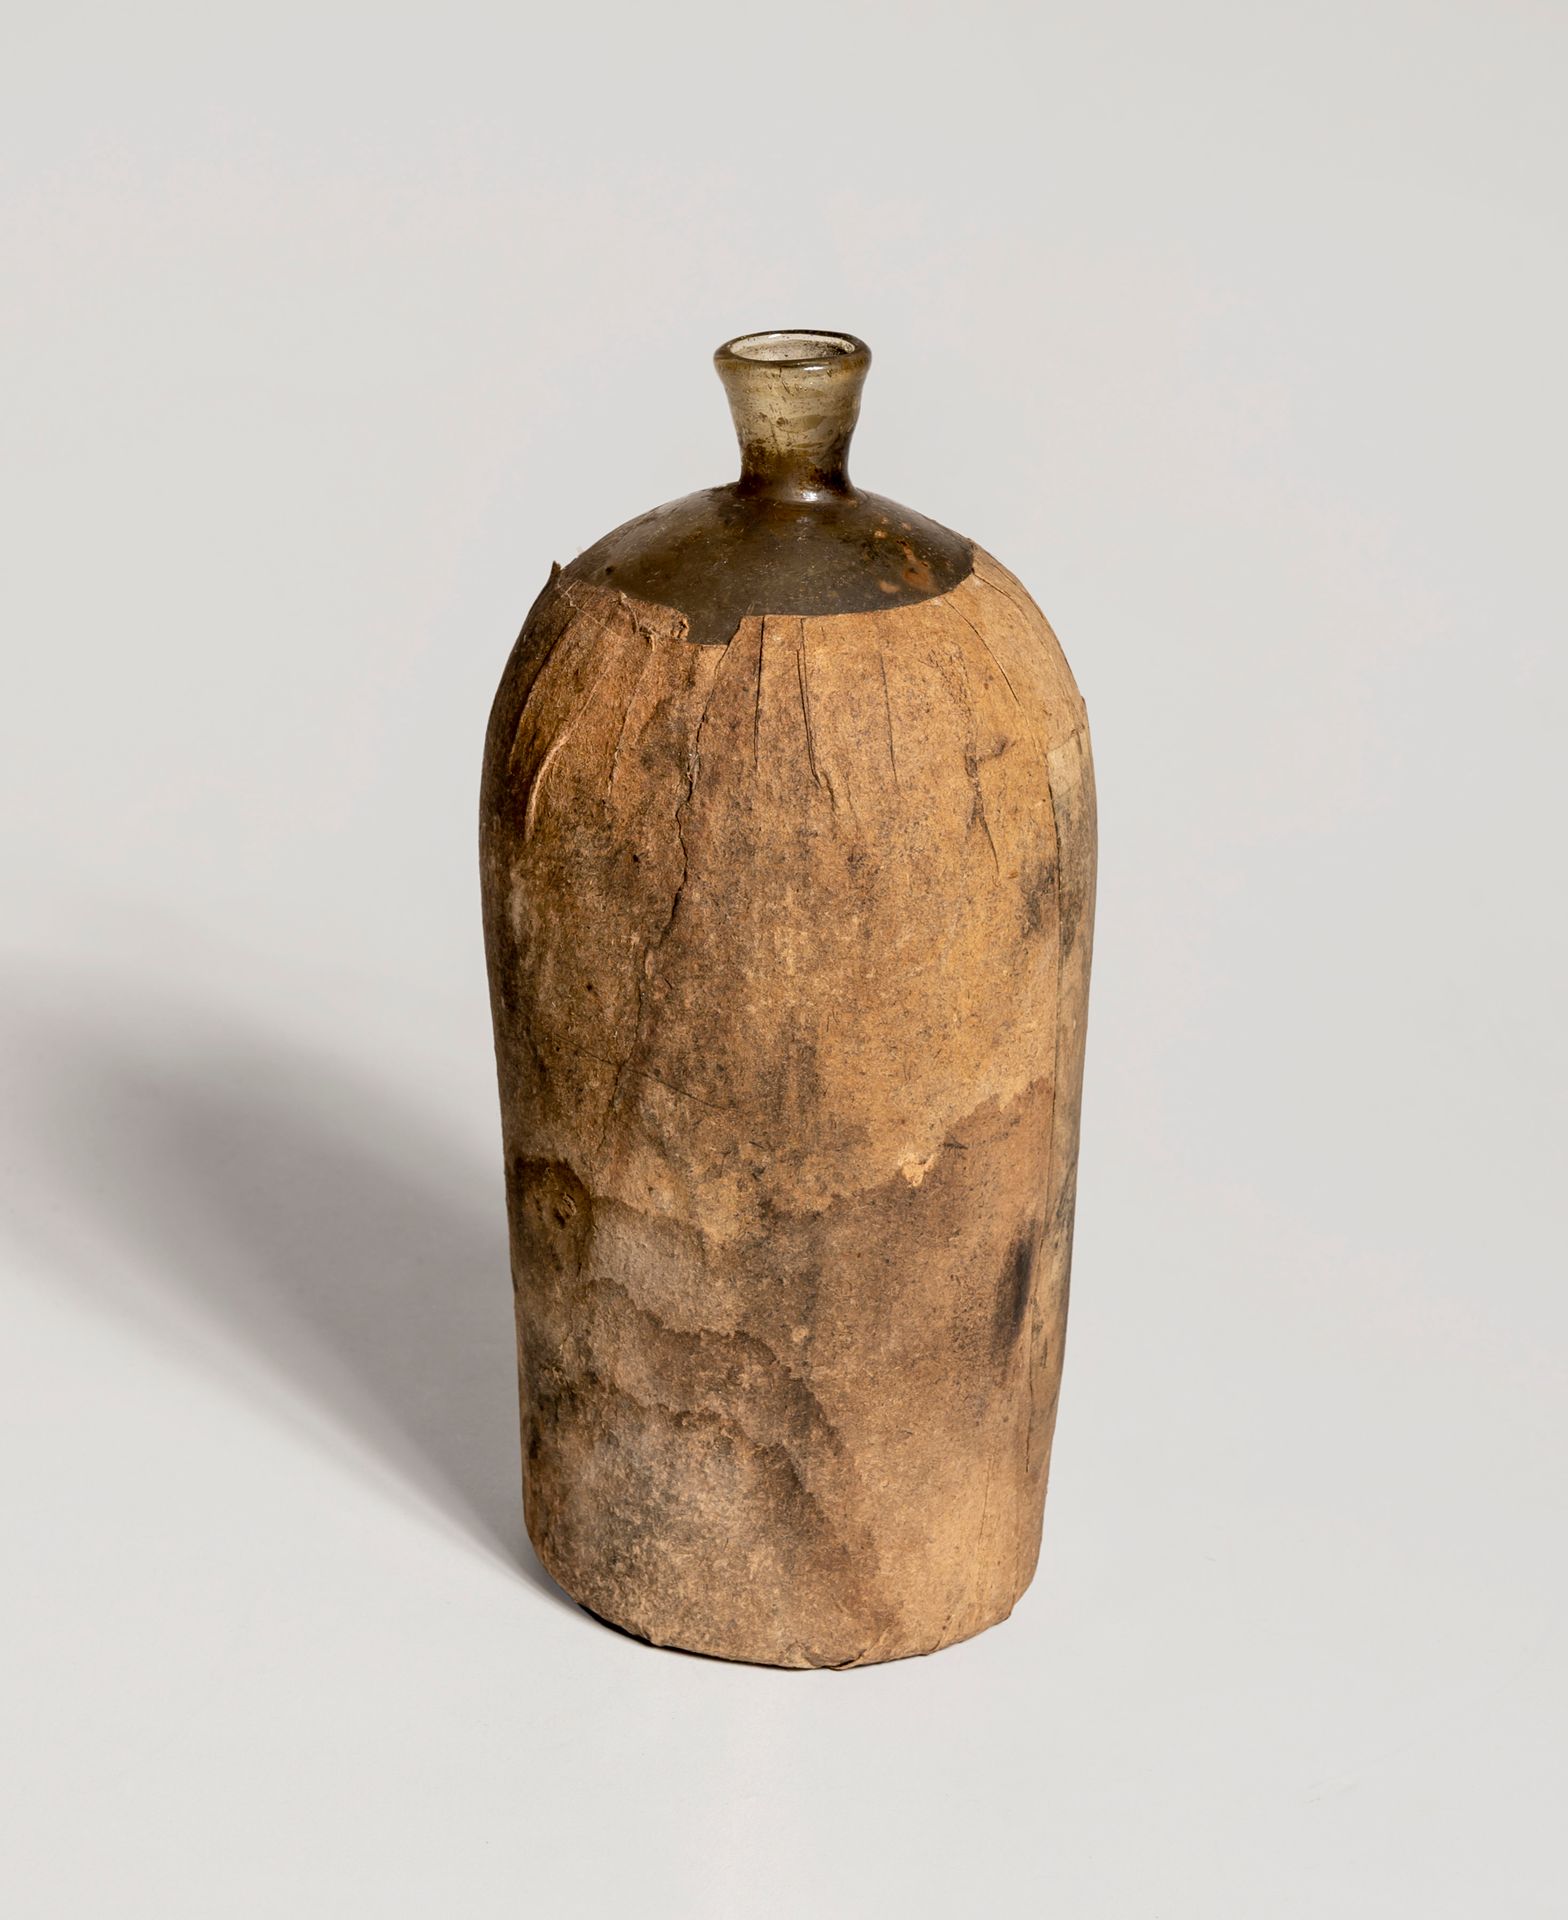 Null 路易十四时期的精华瓶。

罕见的吹制玻璃瓶，全部用纸覆盖，正面有一个标签，上面有手写的题词，提到所含的精华："Bergamotte "和内容物的重量 &hellip;